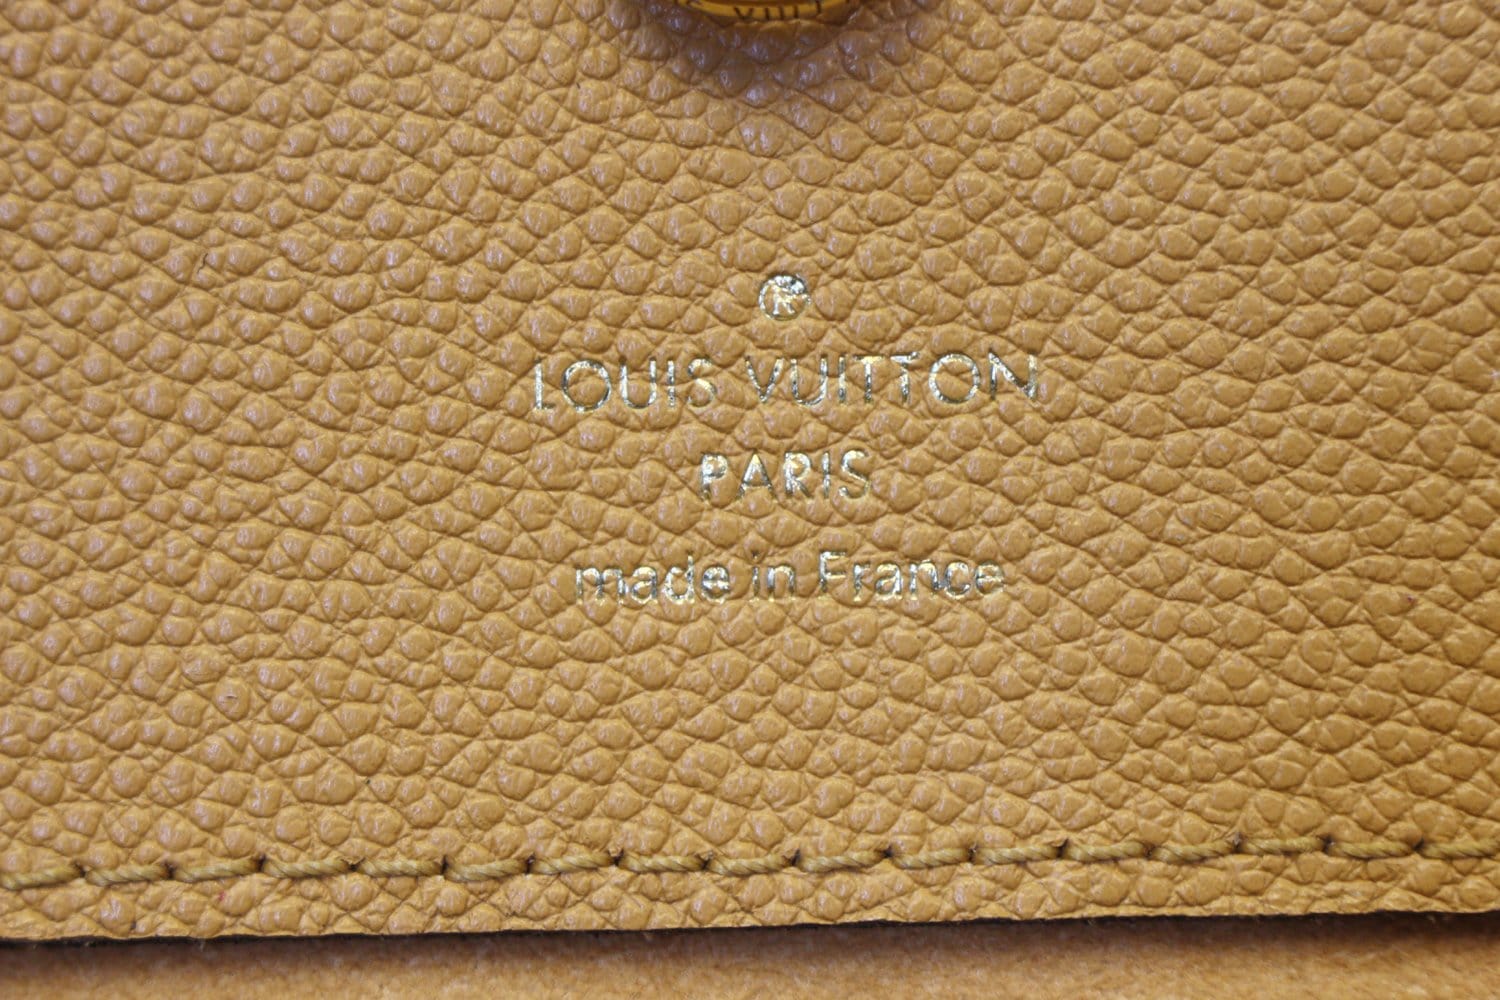 Louis Vuitton Venus Monogram Canvas 2way Shoulder Bag